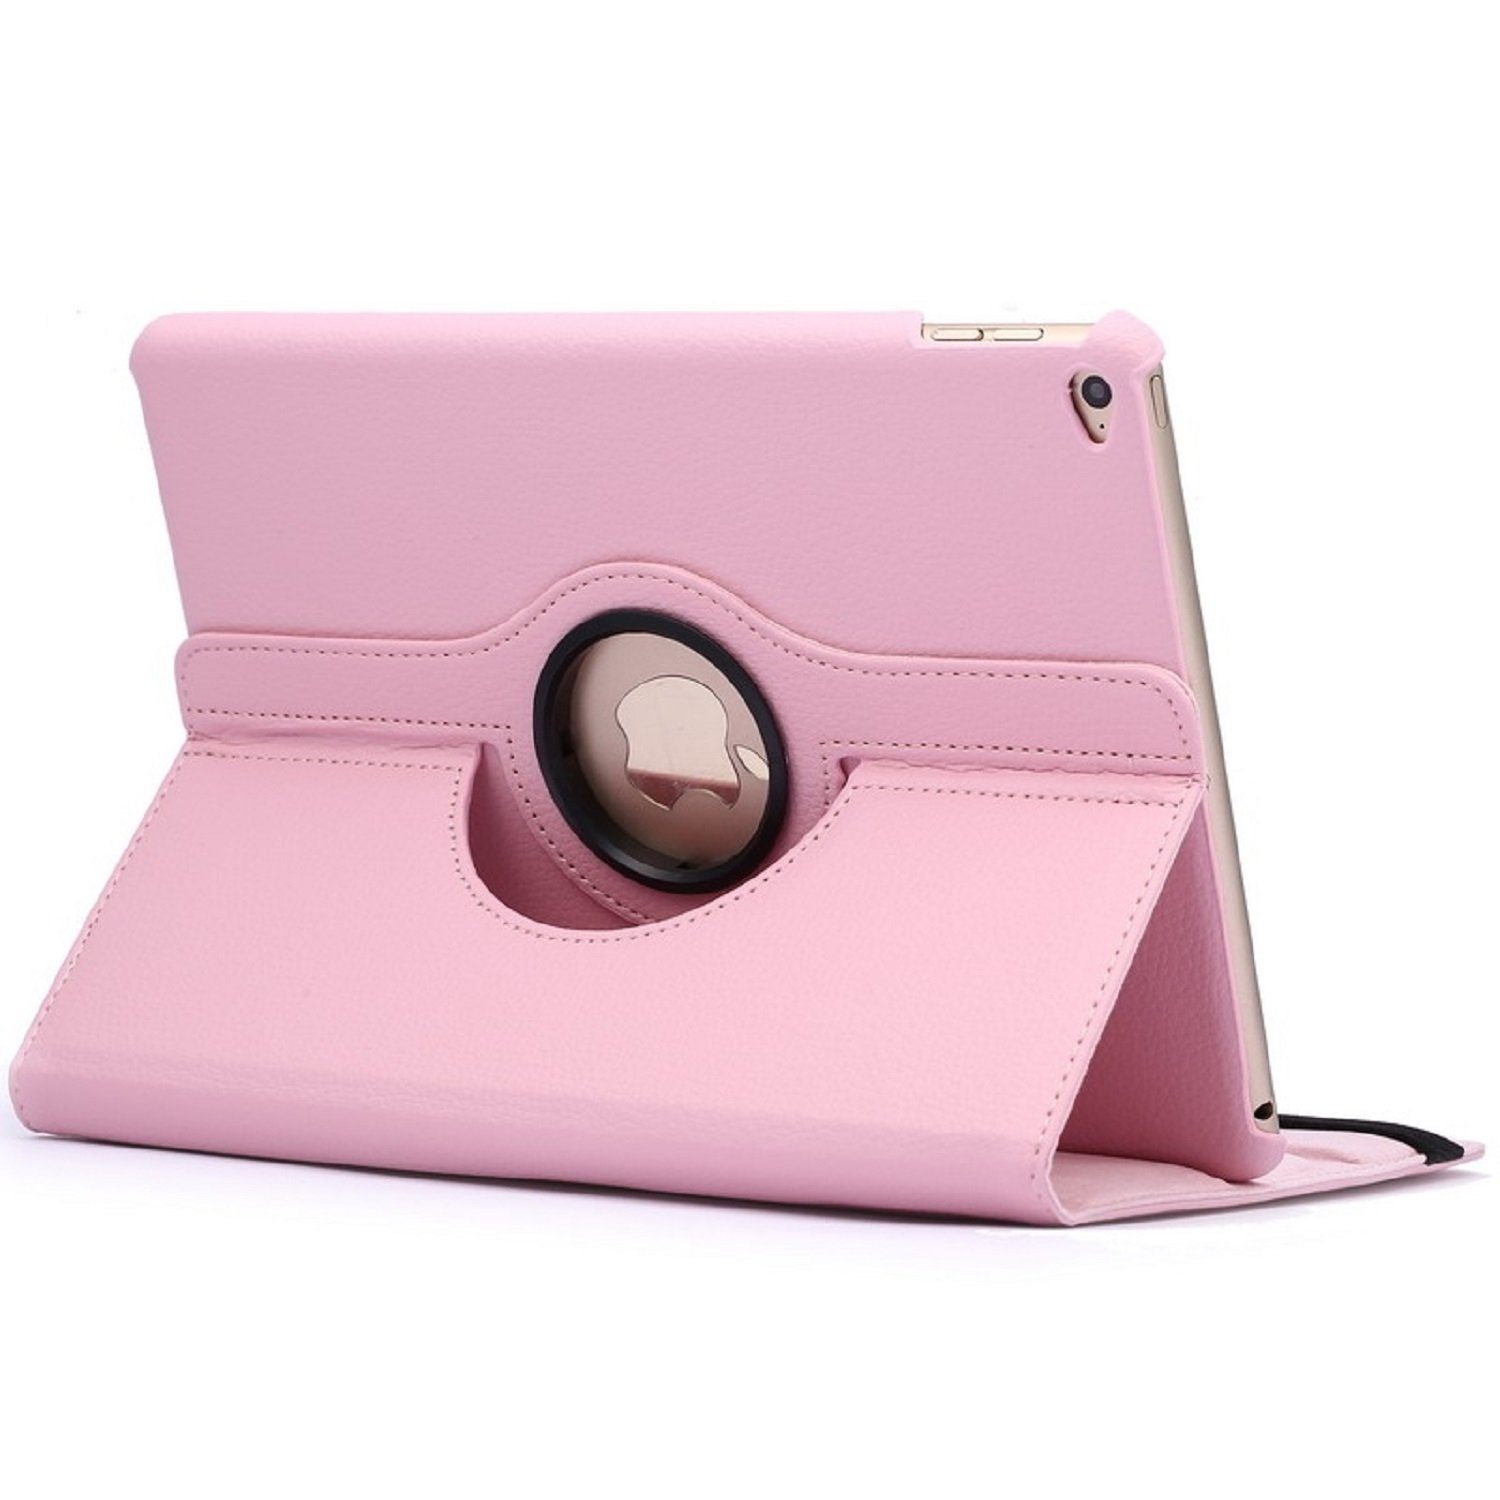 Protectorking Tablet-Hülle Schutzhülle für iPad Air Tablet Hülle Schutz  Tasche Case Cover Pink 9.7 Zoll, Tablet Schutzhülle mit Wakeup/Sleep -  Funktion, 360° Drehbar